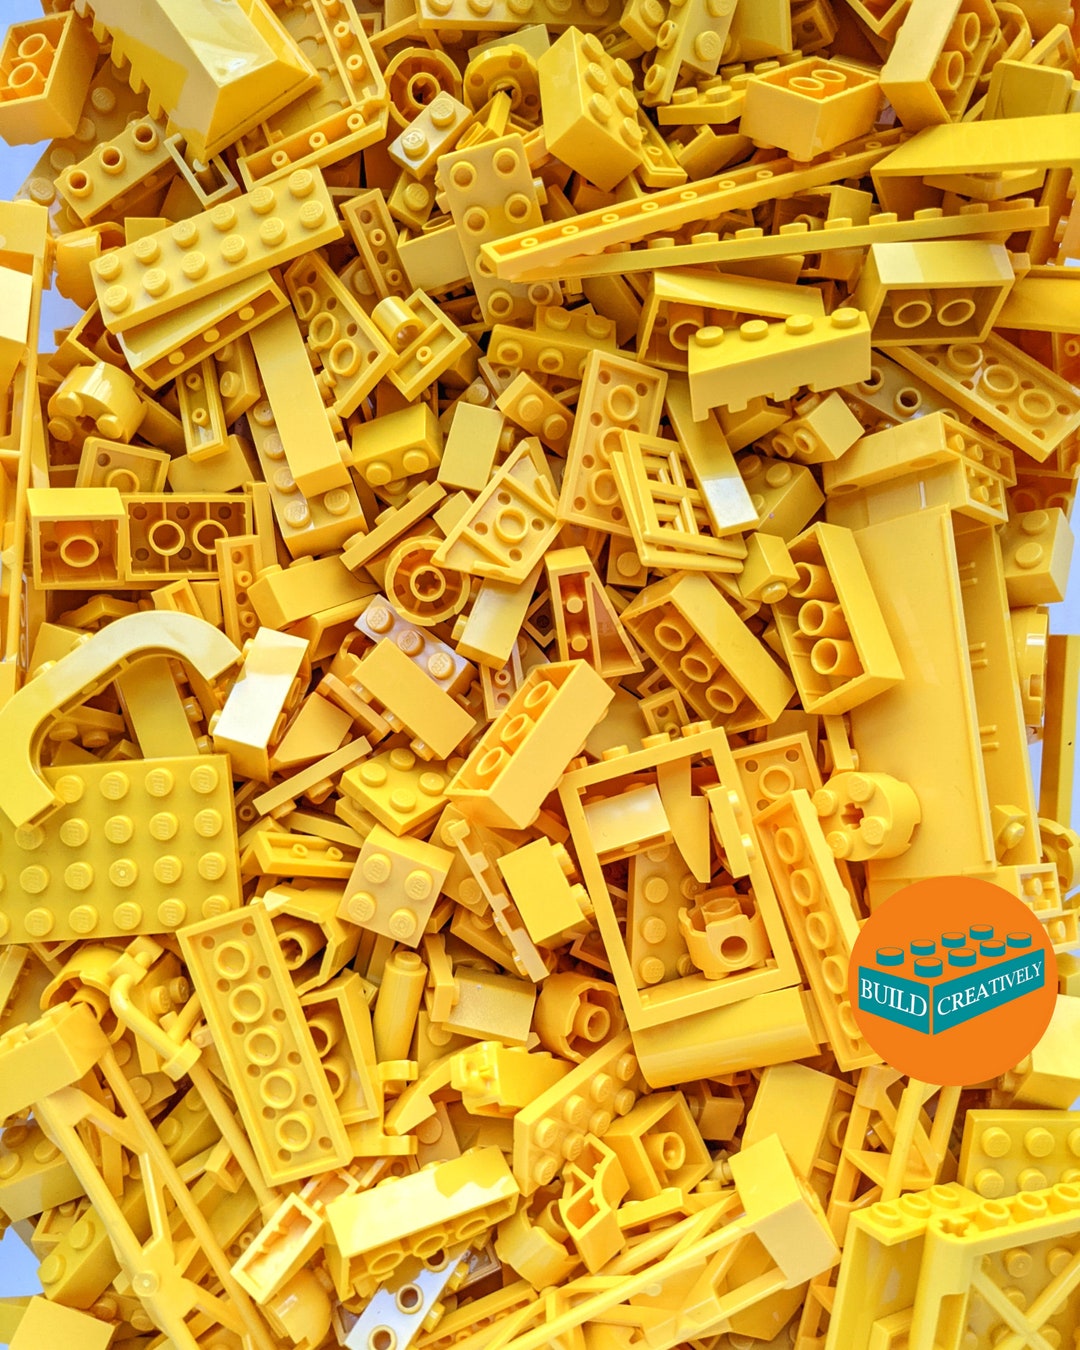 S-WASH Bag SANITISING WASH BAGS FOR LEGO toy brick set kits